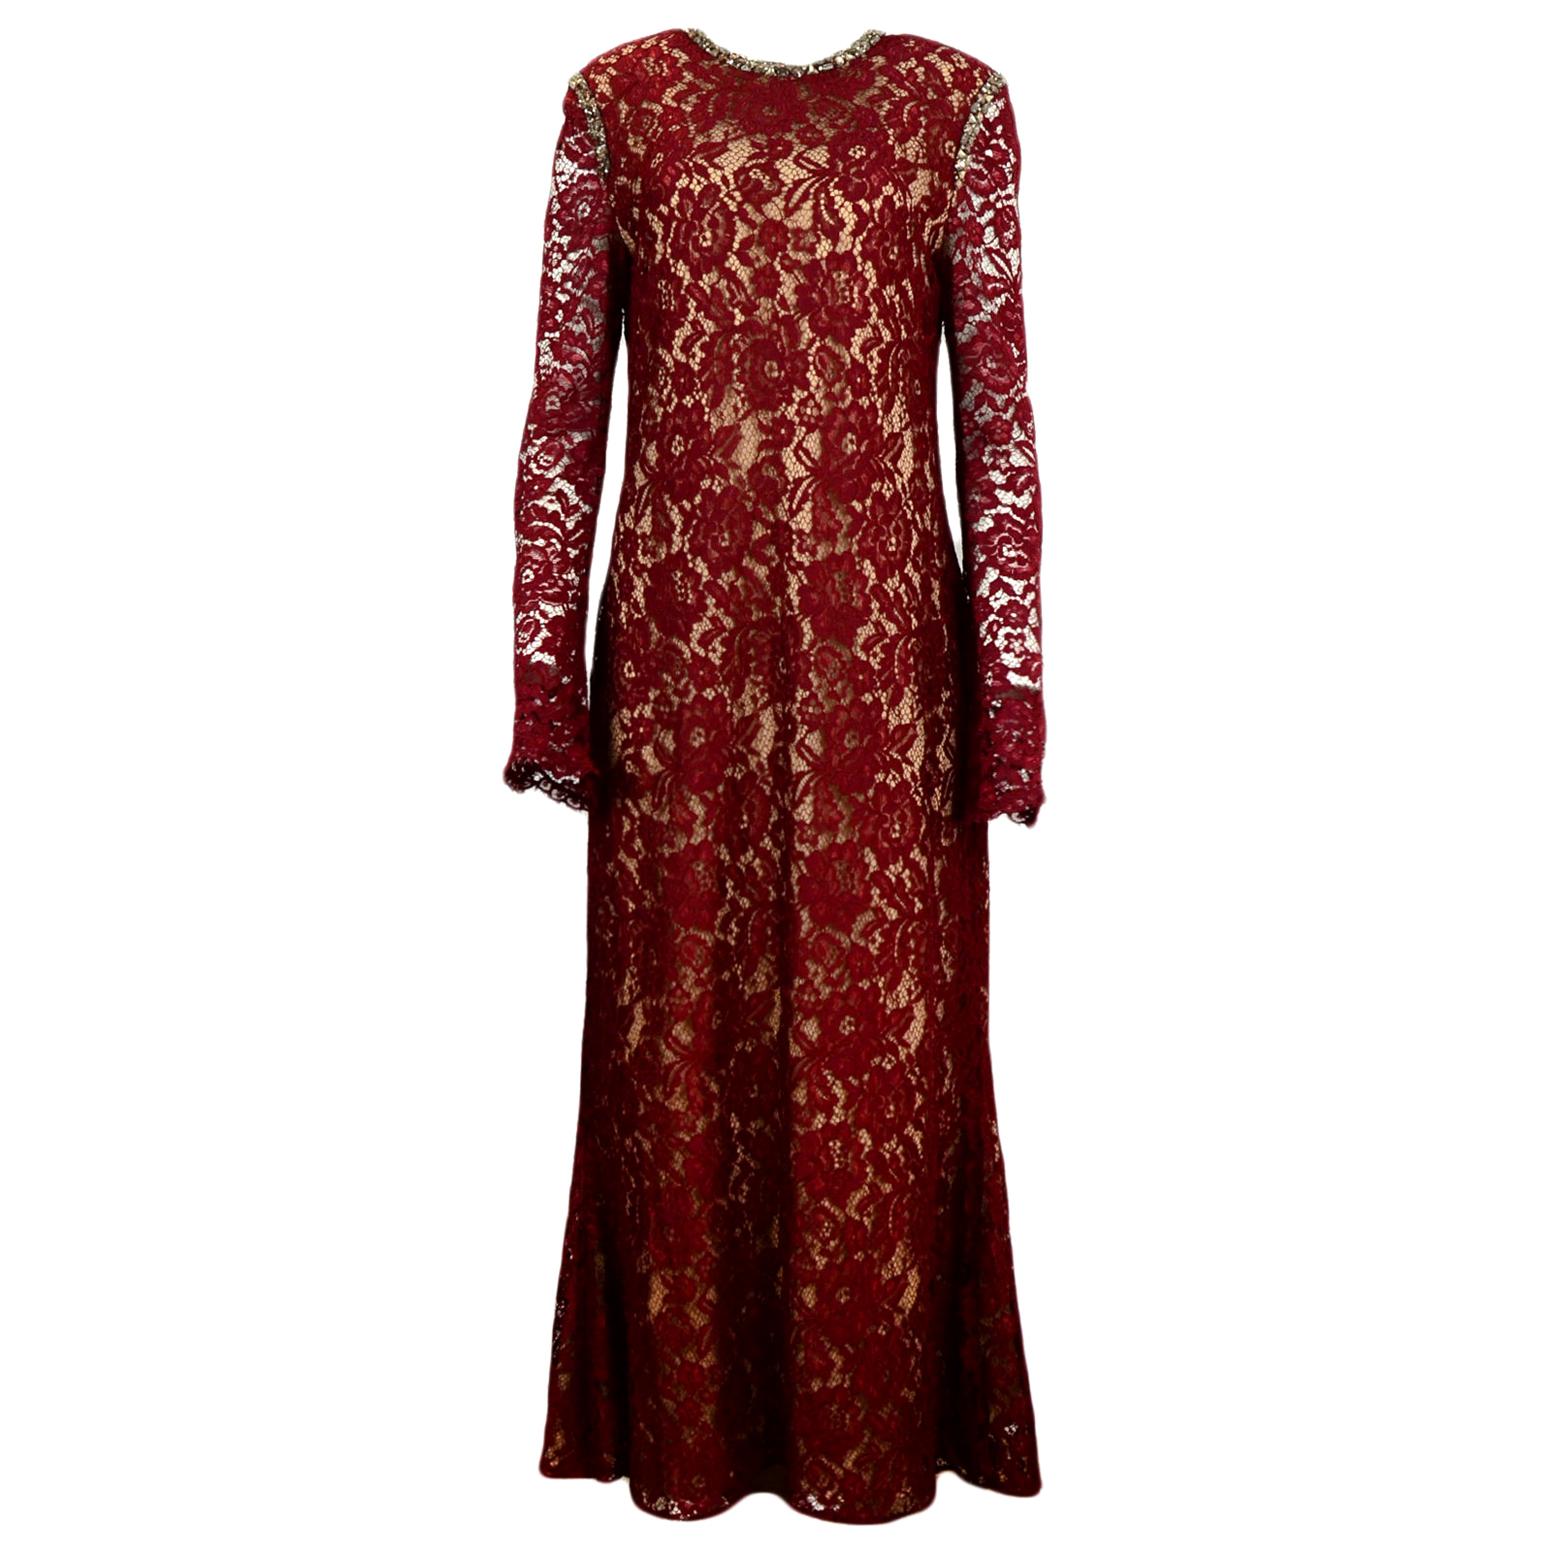 Reem Acra '19 Burgundy Fall Lace Longsleeve Gown w/ Crystal Detail sz 16